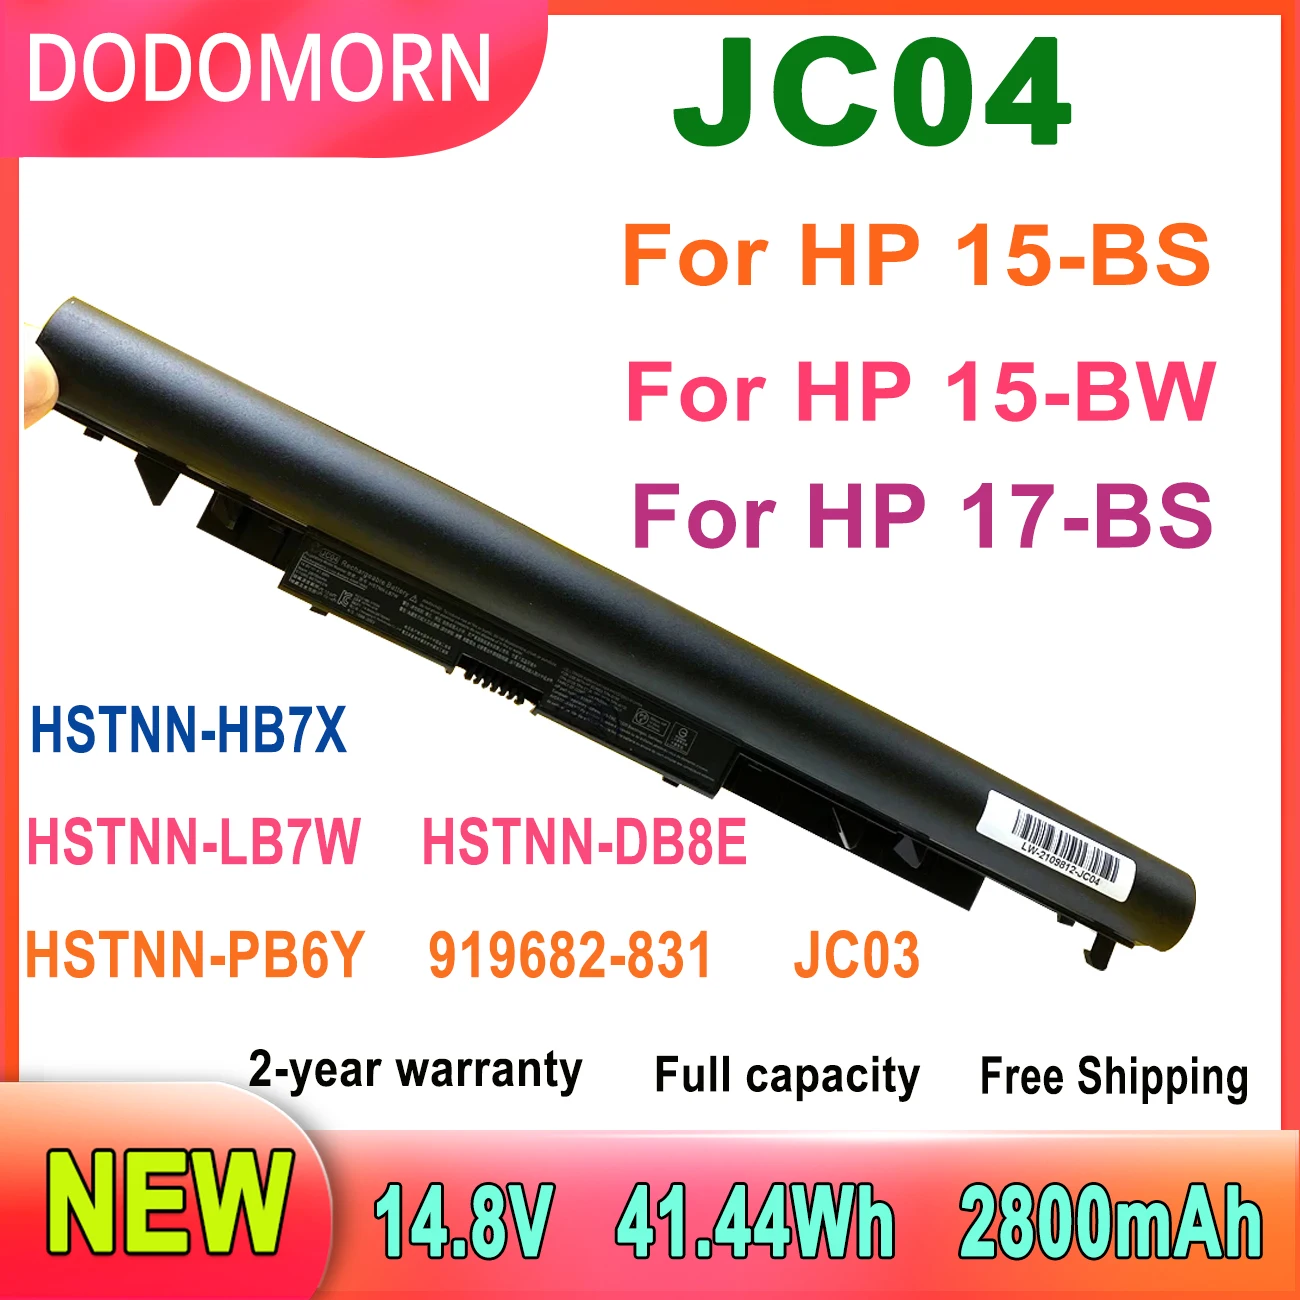 

DODOMORN JC04 JC03 Laptop Battery For HP 15-BS 15-BW 17-BS HSTNN-PB6Y 919681-831 HSTNN-HB7X HSTNN-DB8A TPN-C130 919701-850 14.8V